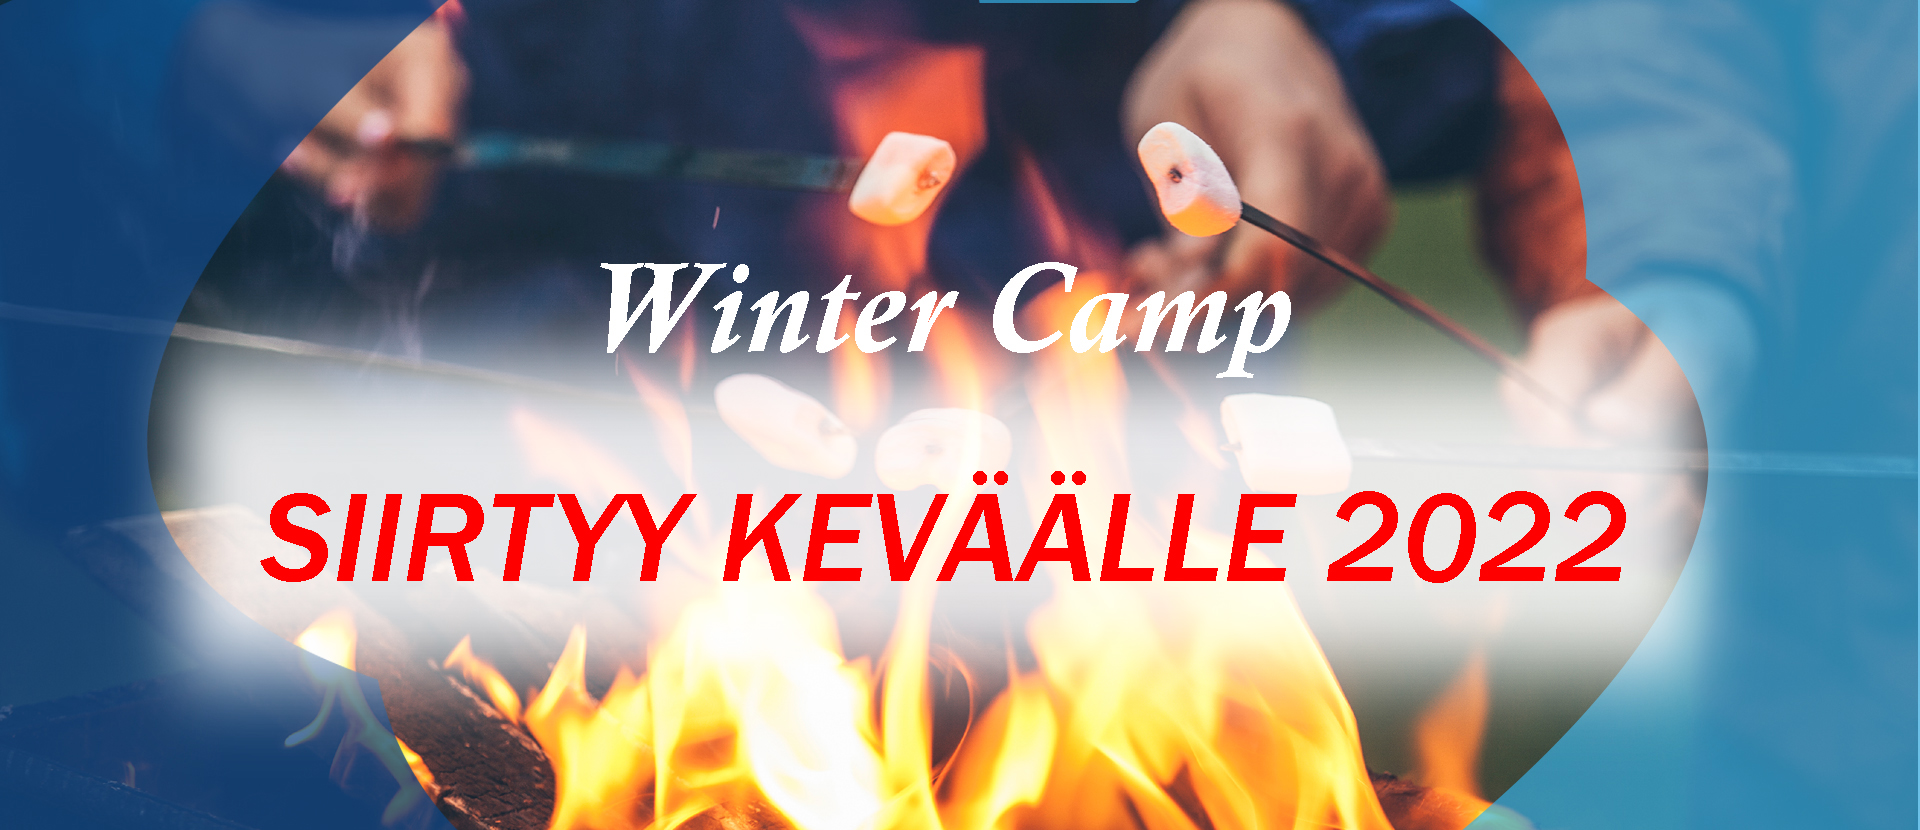 Winter Camp 2022